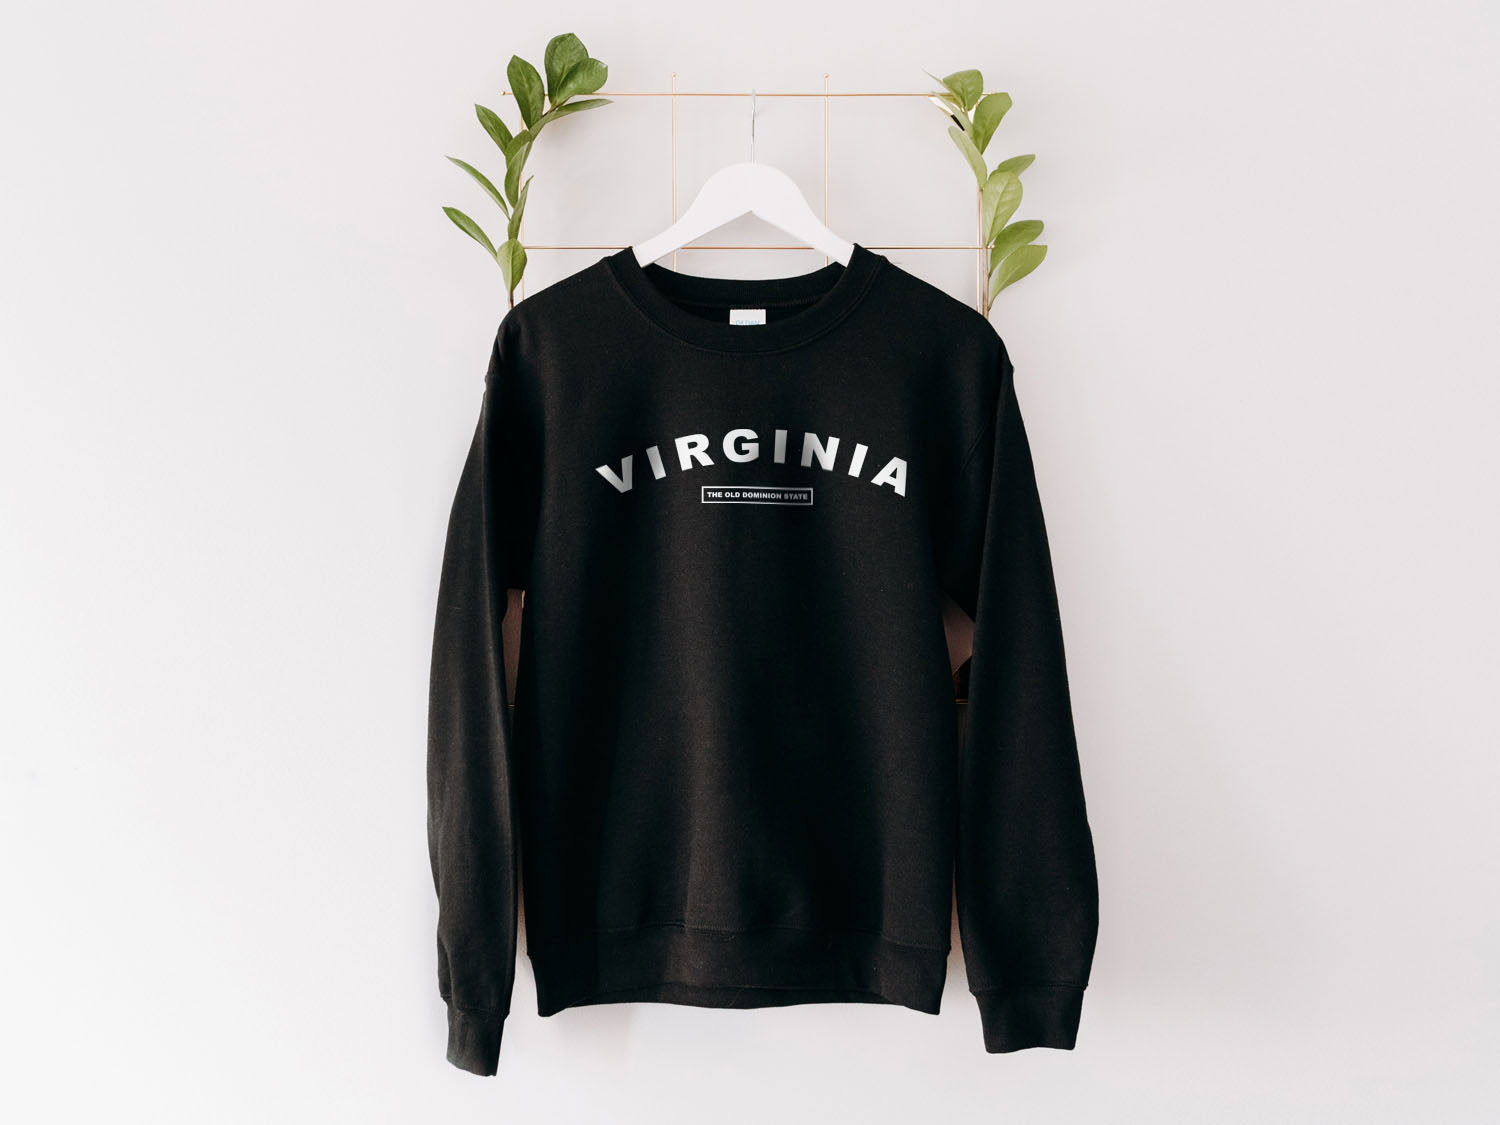 Virginia The Old Dominion State Sweatshirt - United States Name & Slogan Minimal Design Printed Sweatshirt